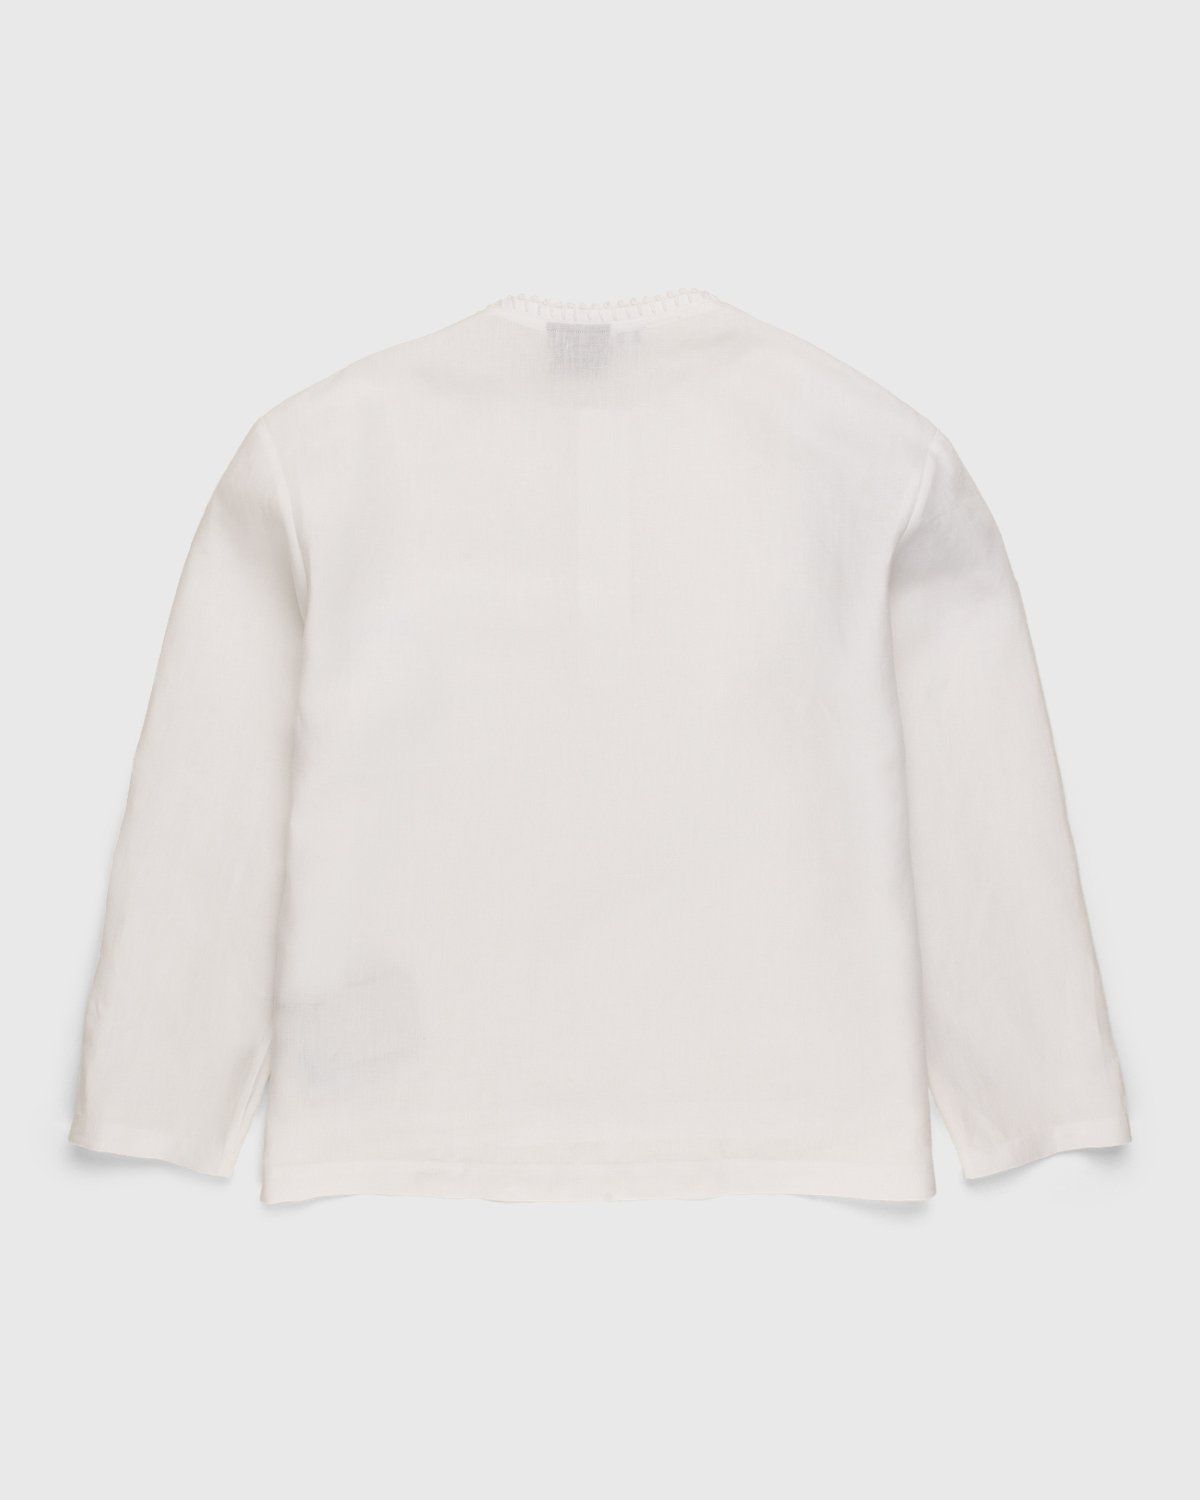 Loewe – Paula's Ibiza Buttoned Pullover Shirt White - Shirts - White - Image 2